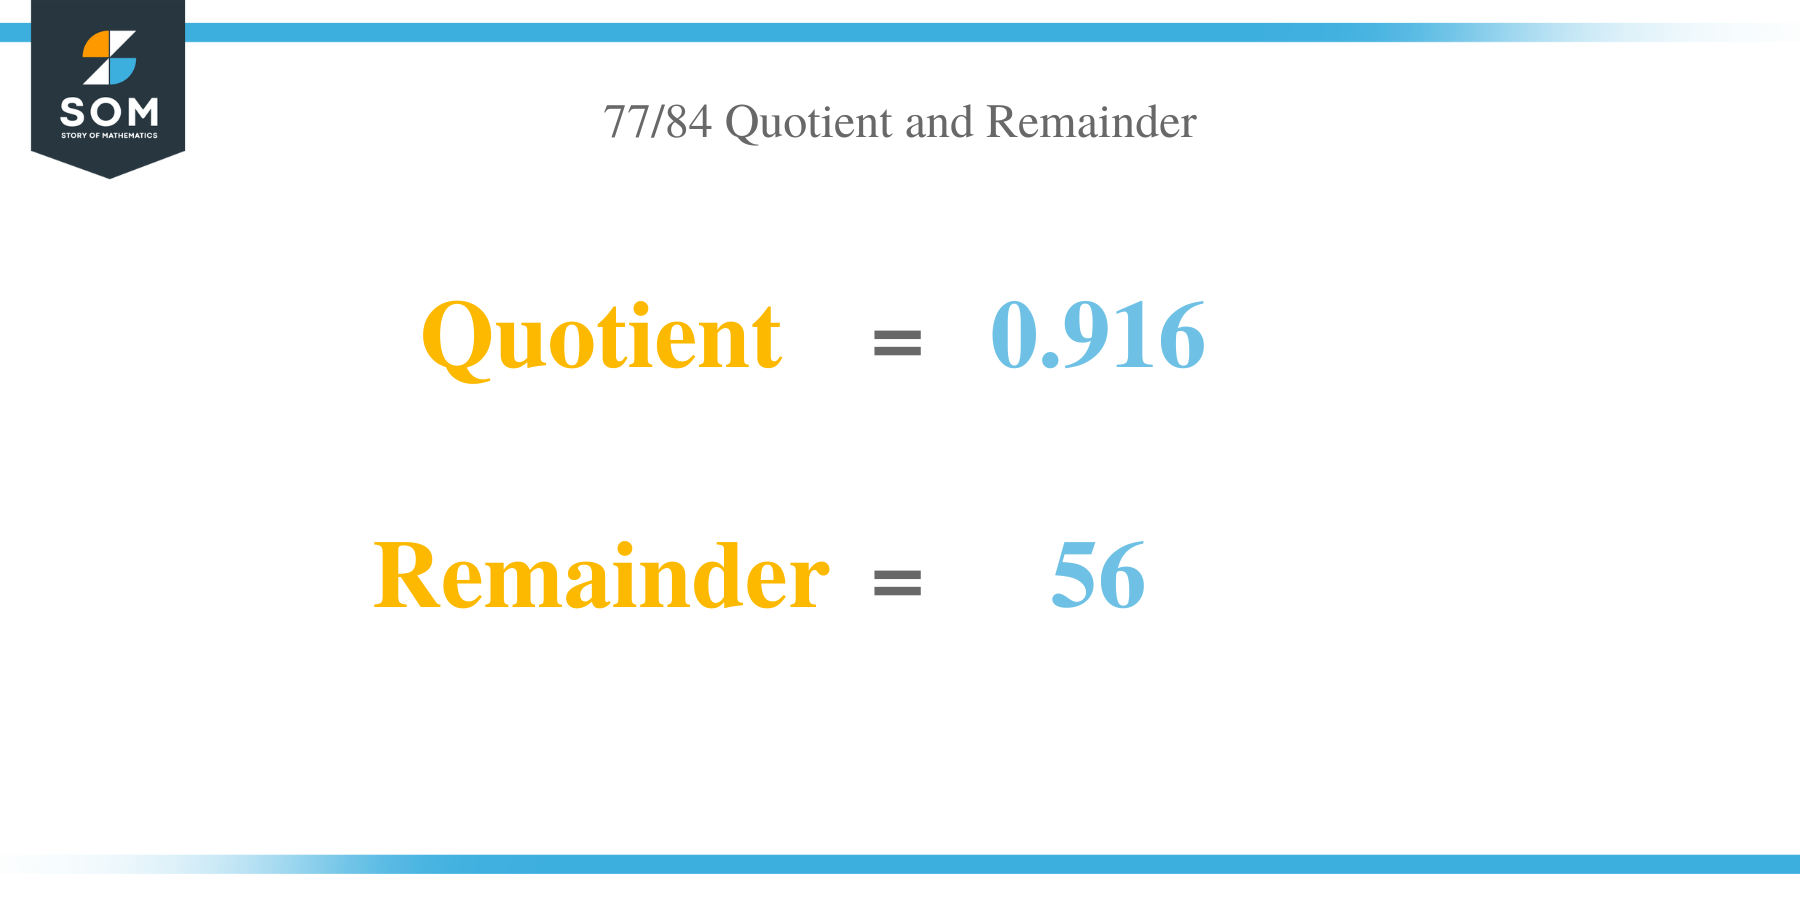 Quotient and Remainder of 77 per 84